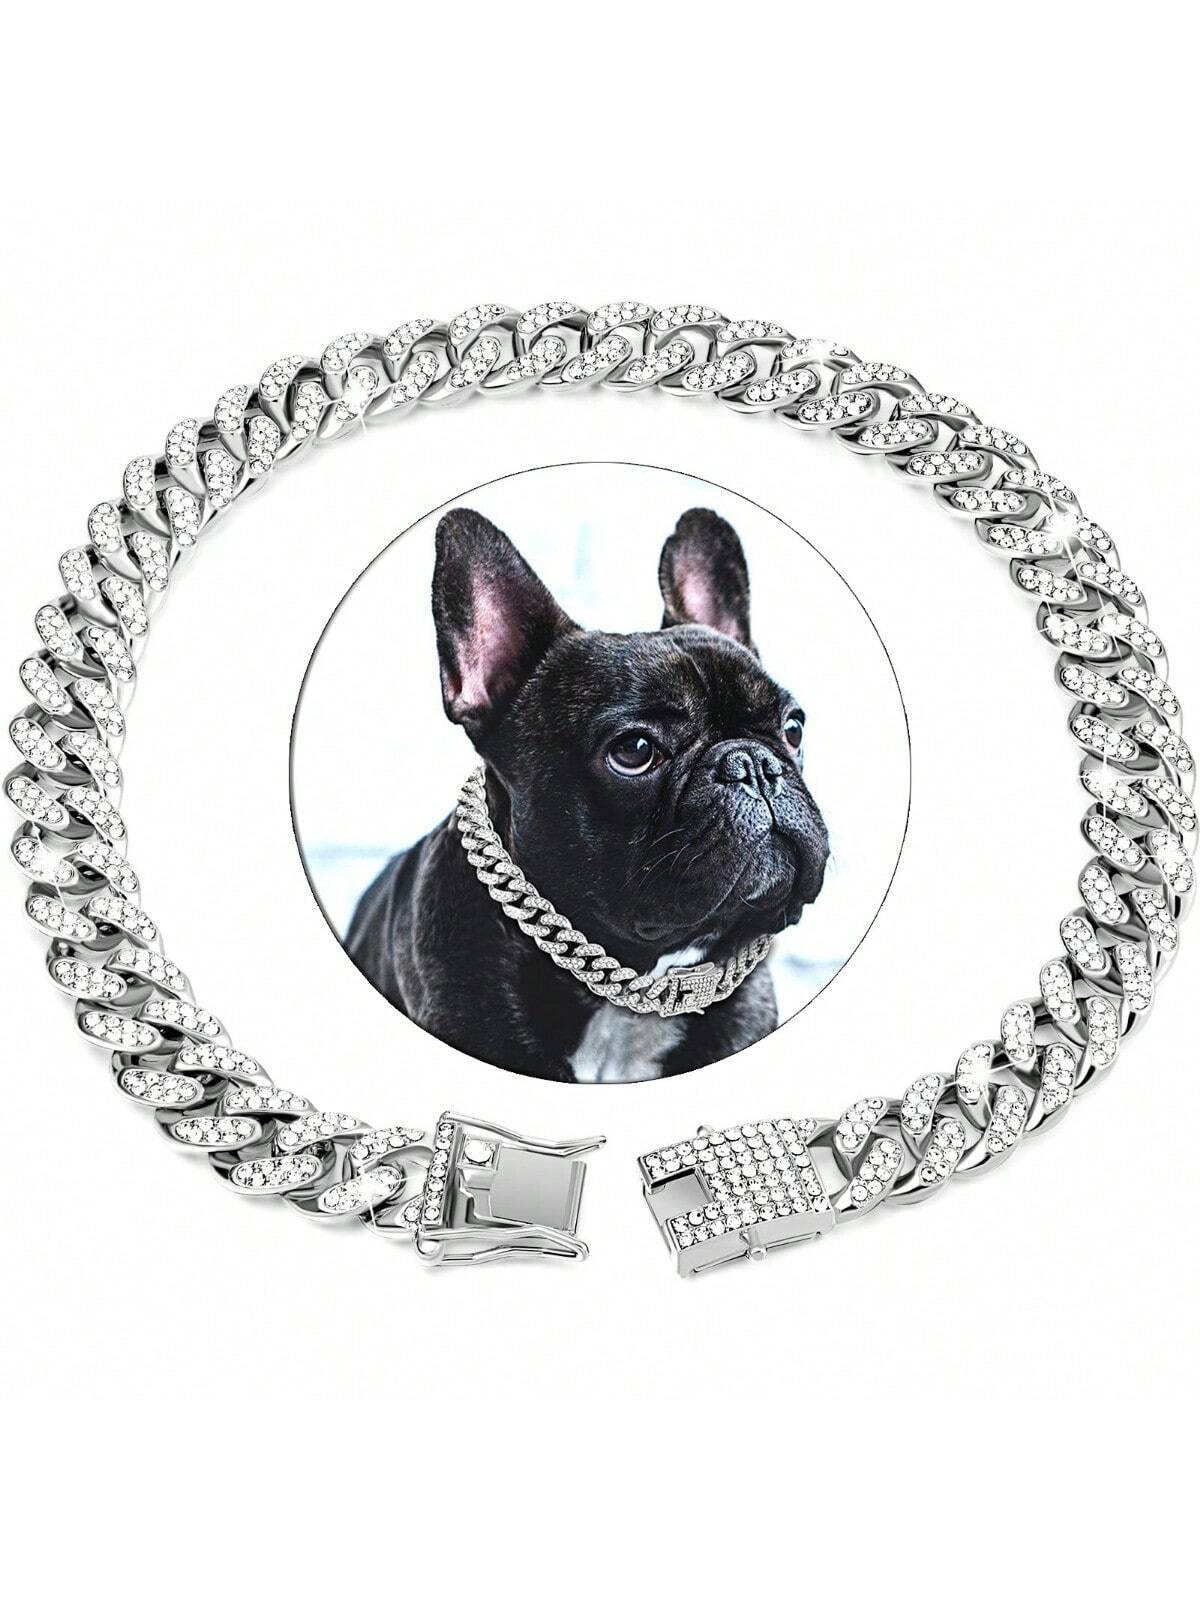 Sparkling Diamondoid Dog Collar